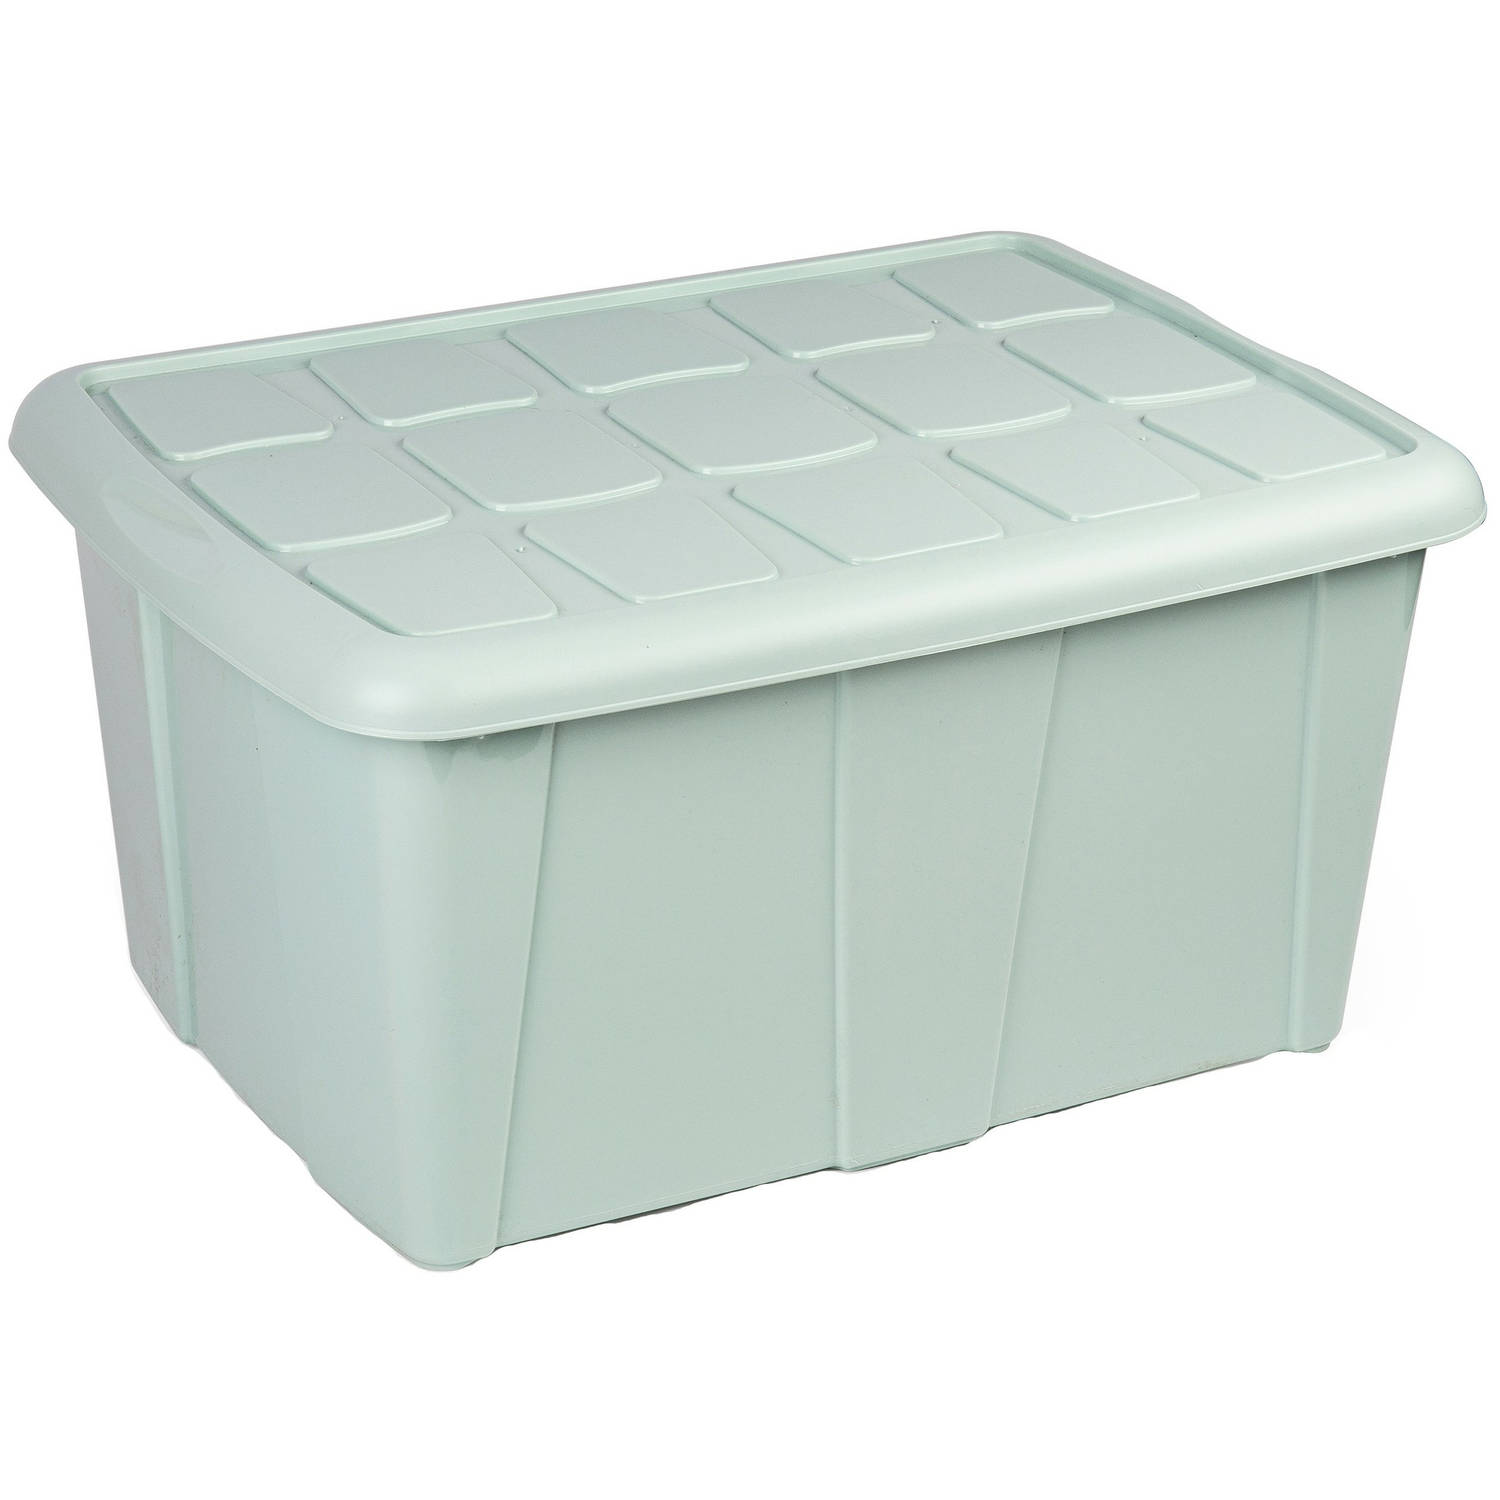 Opslagbox kist van 60 liter met deksel Mintgroen kunststof 63 x 46 x 32 cm Opbergbox